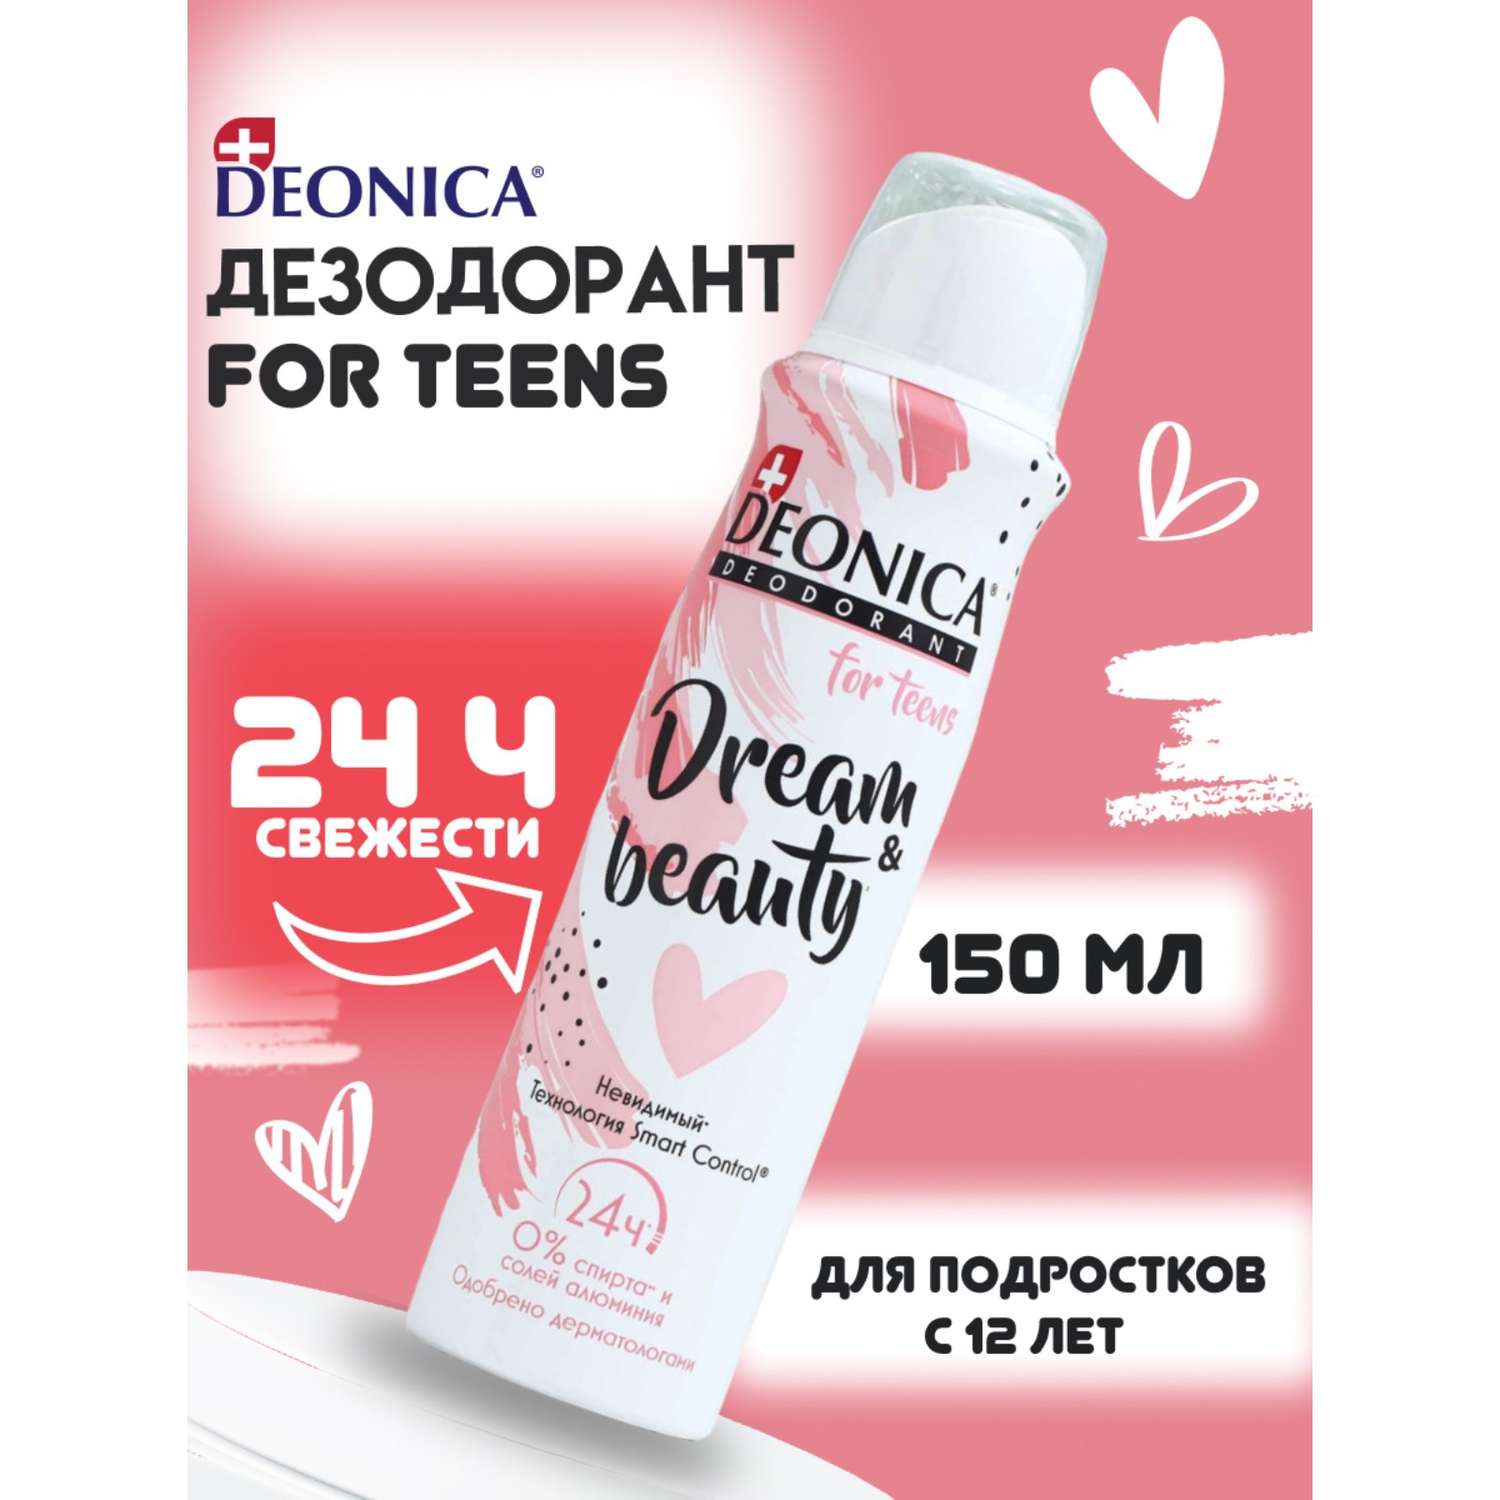 Дезодорант-спрей Deonica для подростков DreamBeauty 150 мл - фото 1